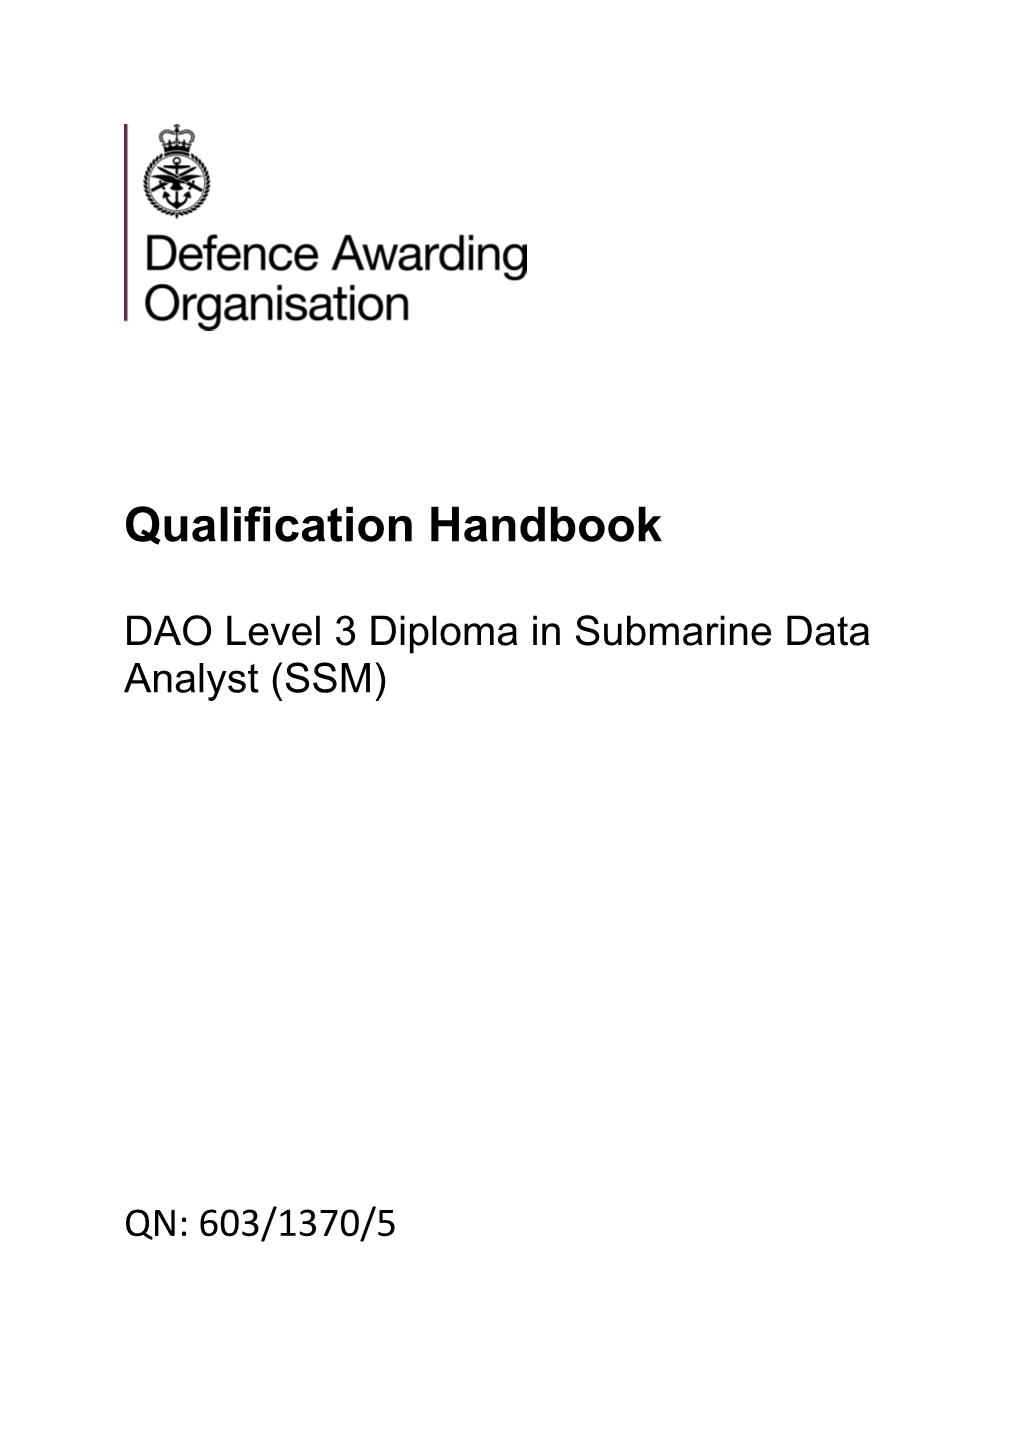 DAO Level 3 Diploma in Submarine Data Analyst (SSM)